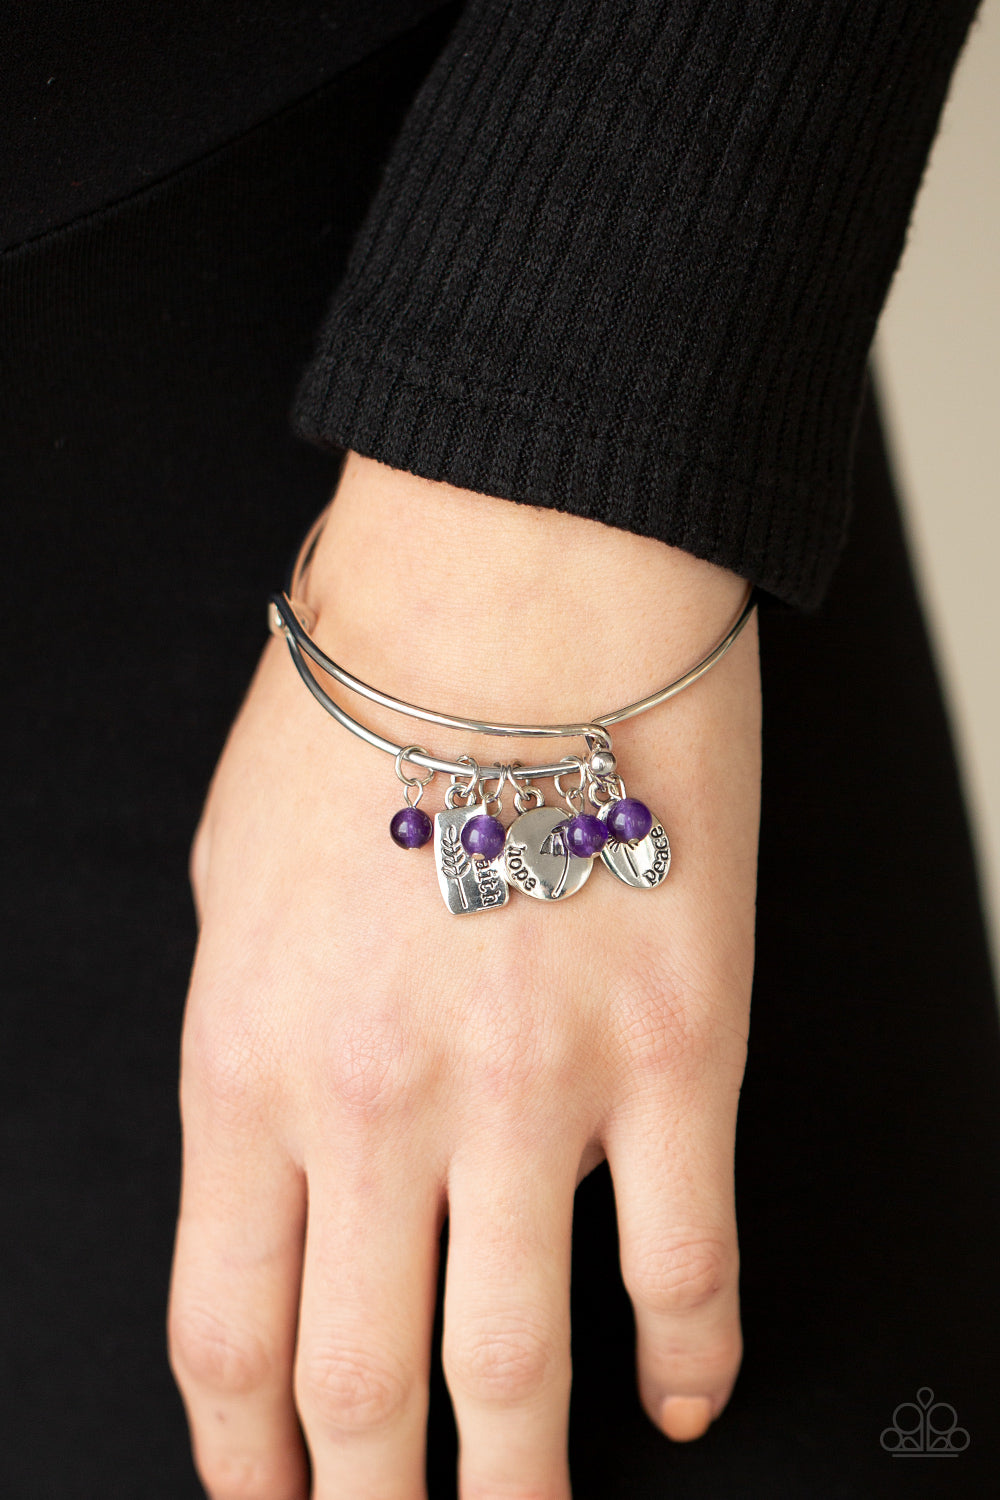 Paparazzi GROWING Strong - Purple - Inspirational Bracelet - $5 Jewelry with Ashley Swint